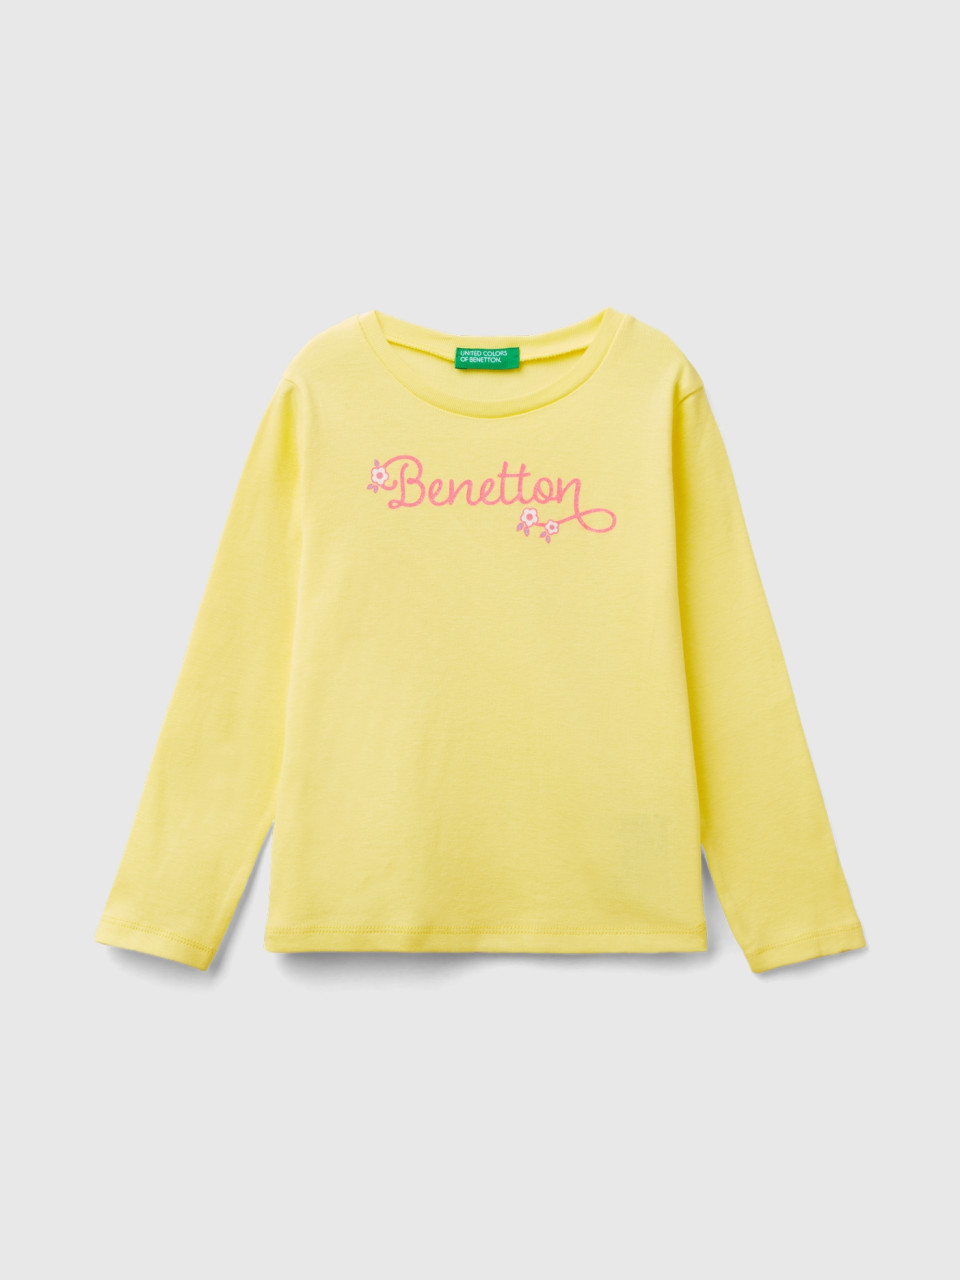 Benetton, Long Sleeve T-shirt With Glittery Print, Yellow, Kids